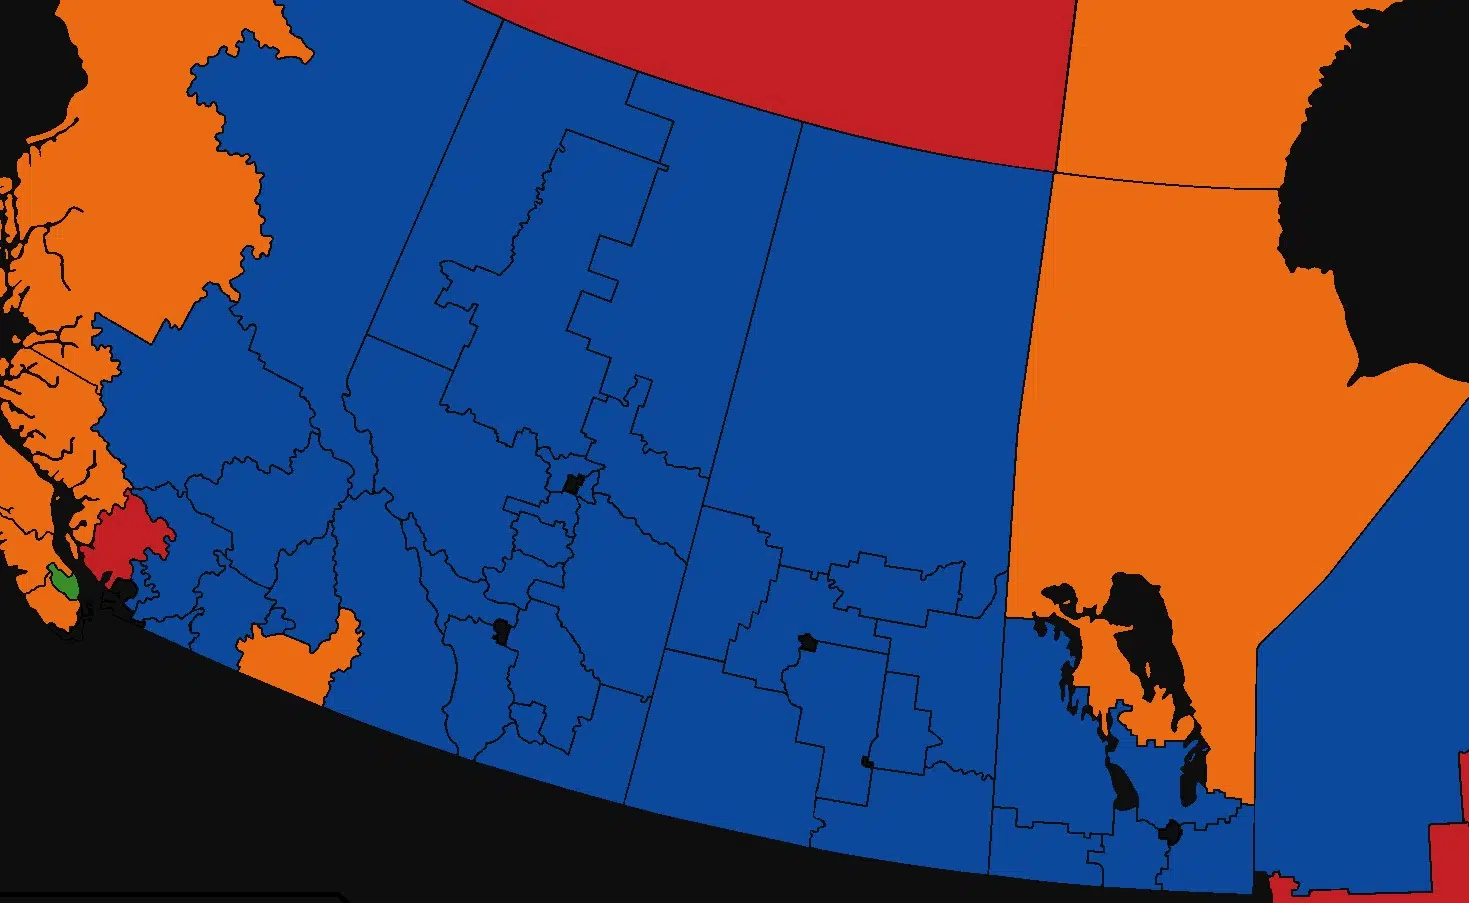 Election result sparks separatist talk in Western Canada